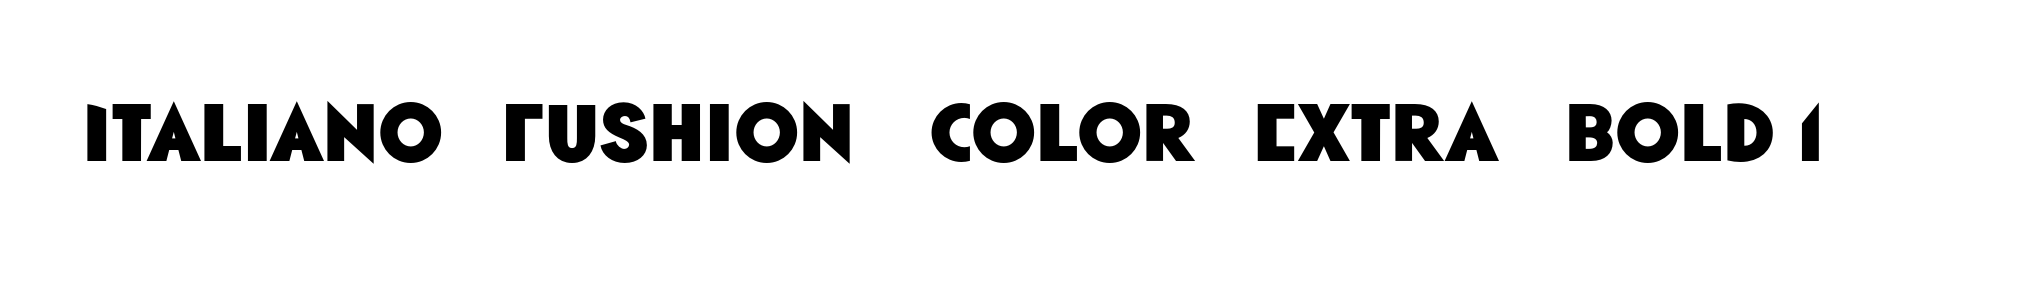 Italiano Fushion Color Extra Bold 1 image